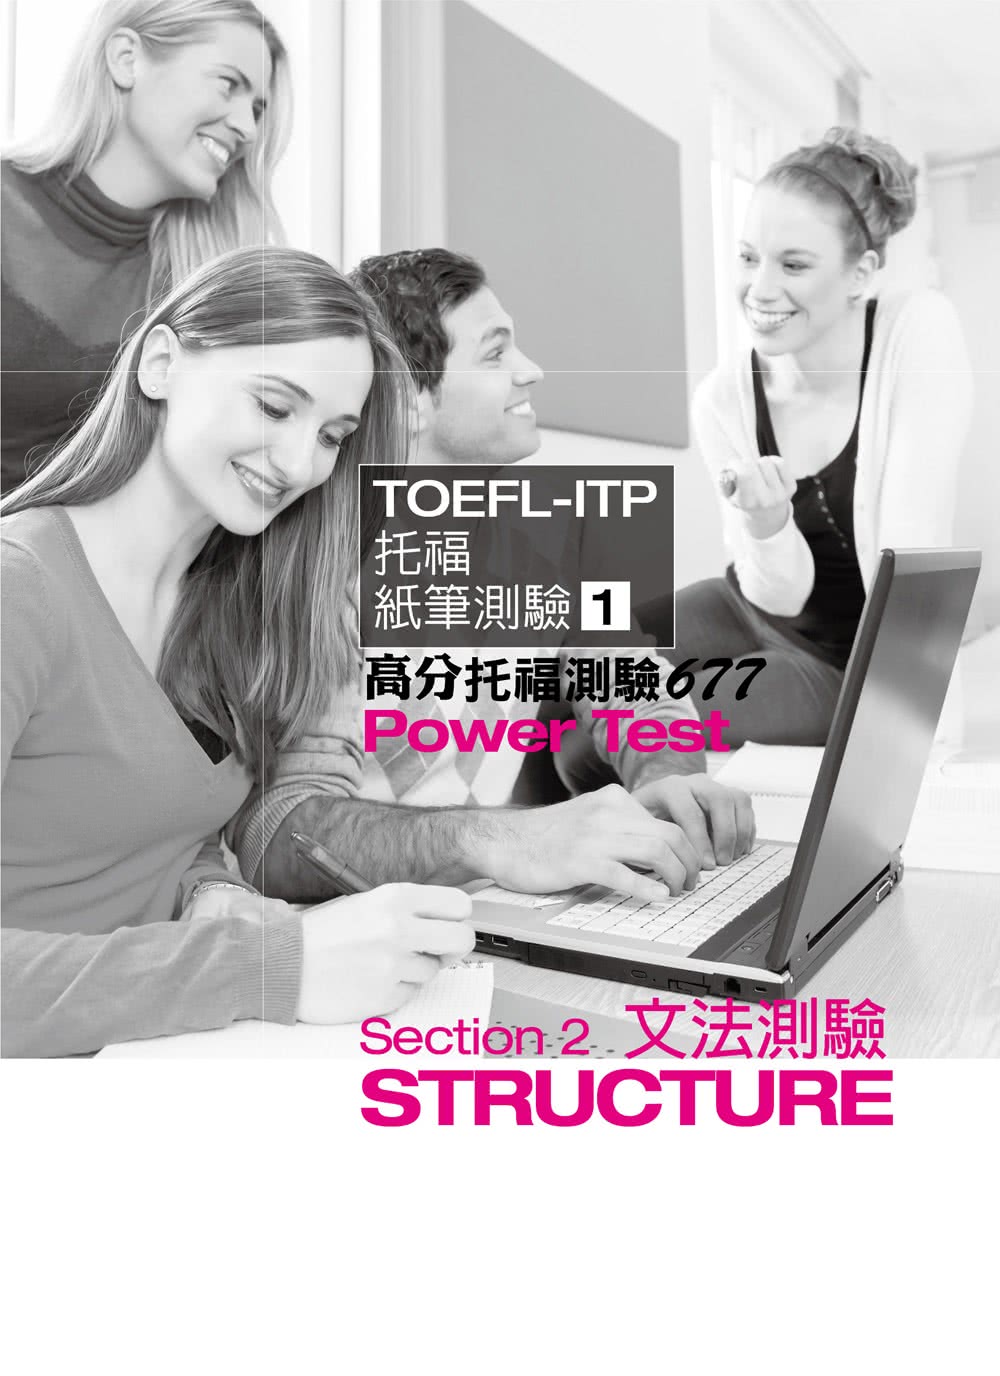 TOEFL－ITP 高分托福測驗677（1MP3）